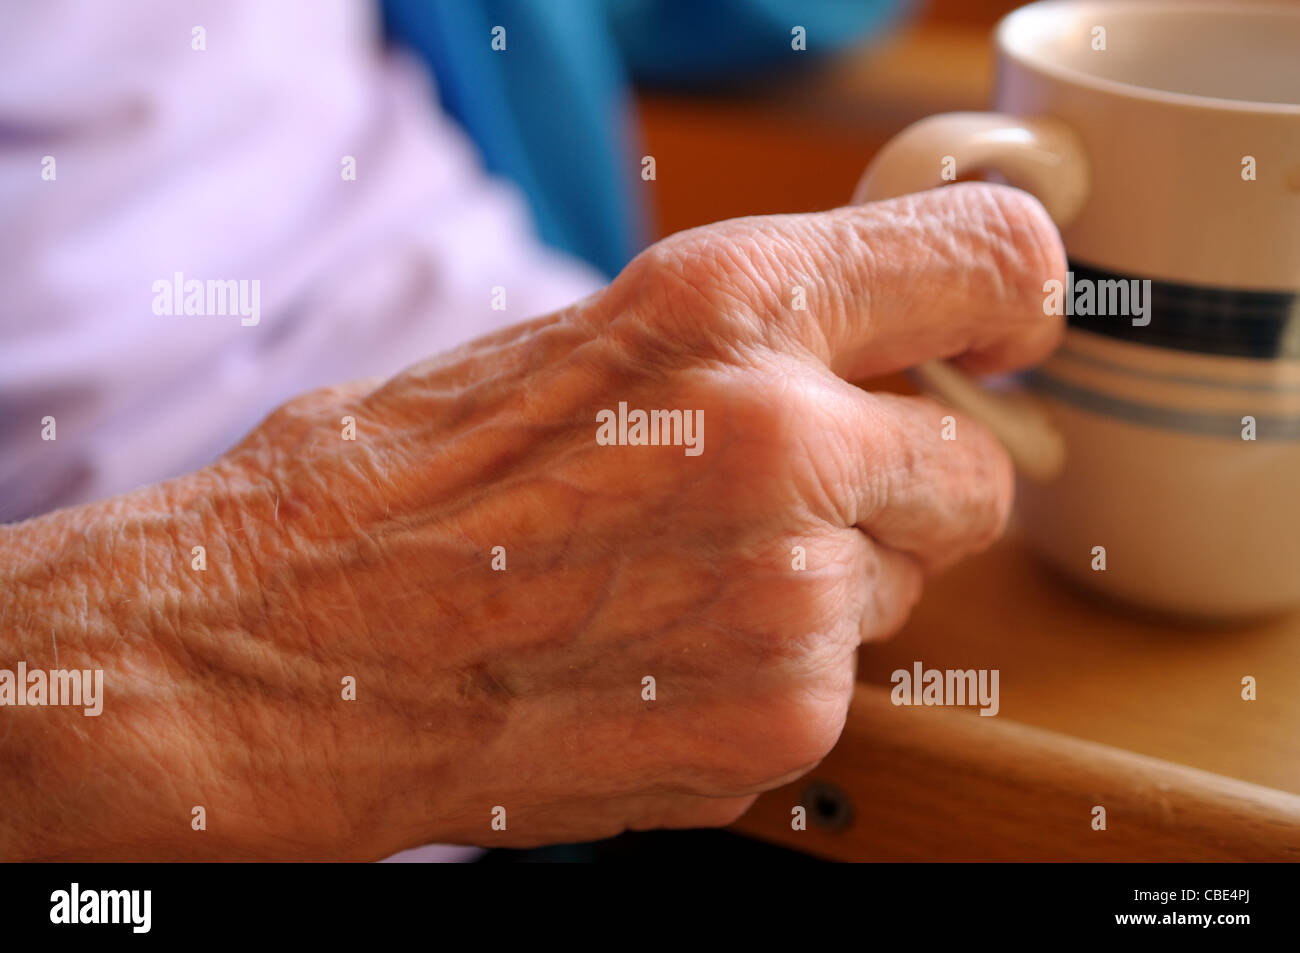 Elderly Women In Care Home. Stock Photo